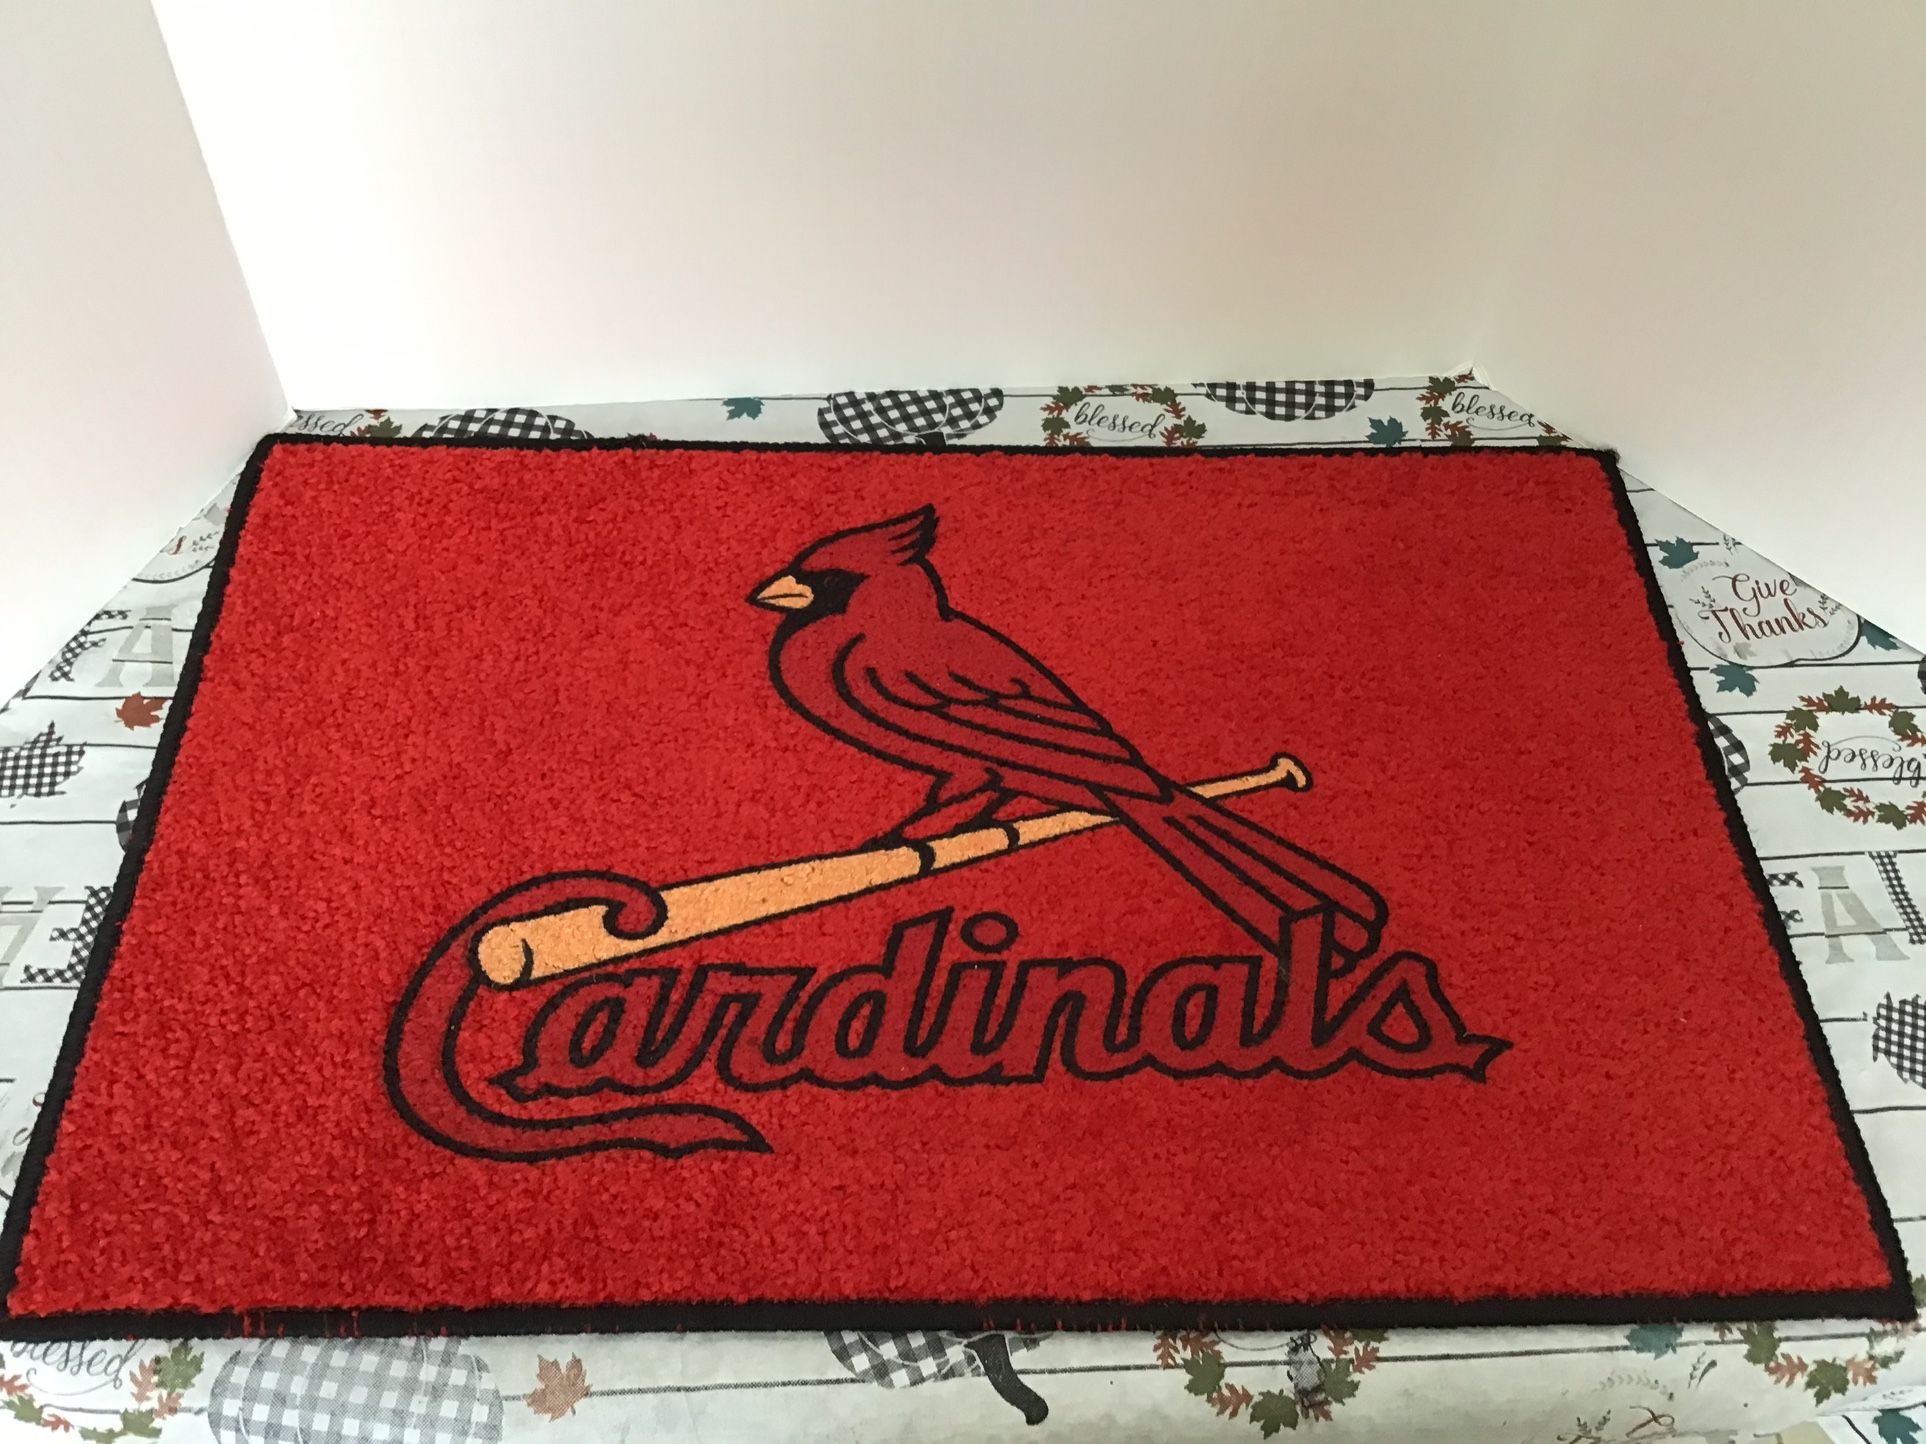 New Cardinals Doormat 27“ X 18“ Indoor Outdoor I have the blues mats also